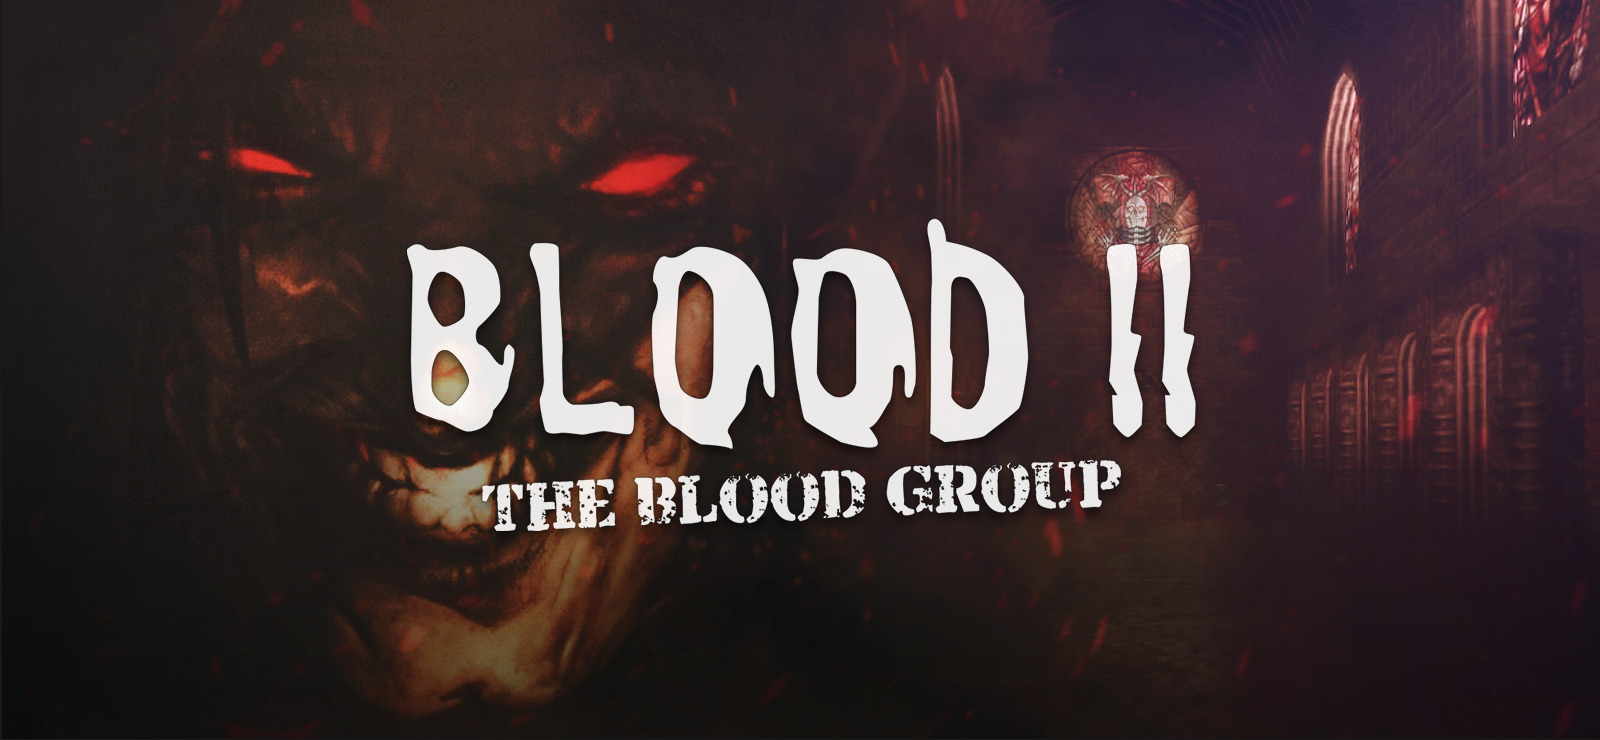 Bladporn Co - Blood 2: The Blood Group on GOG.com